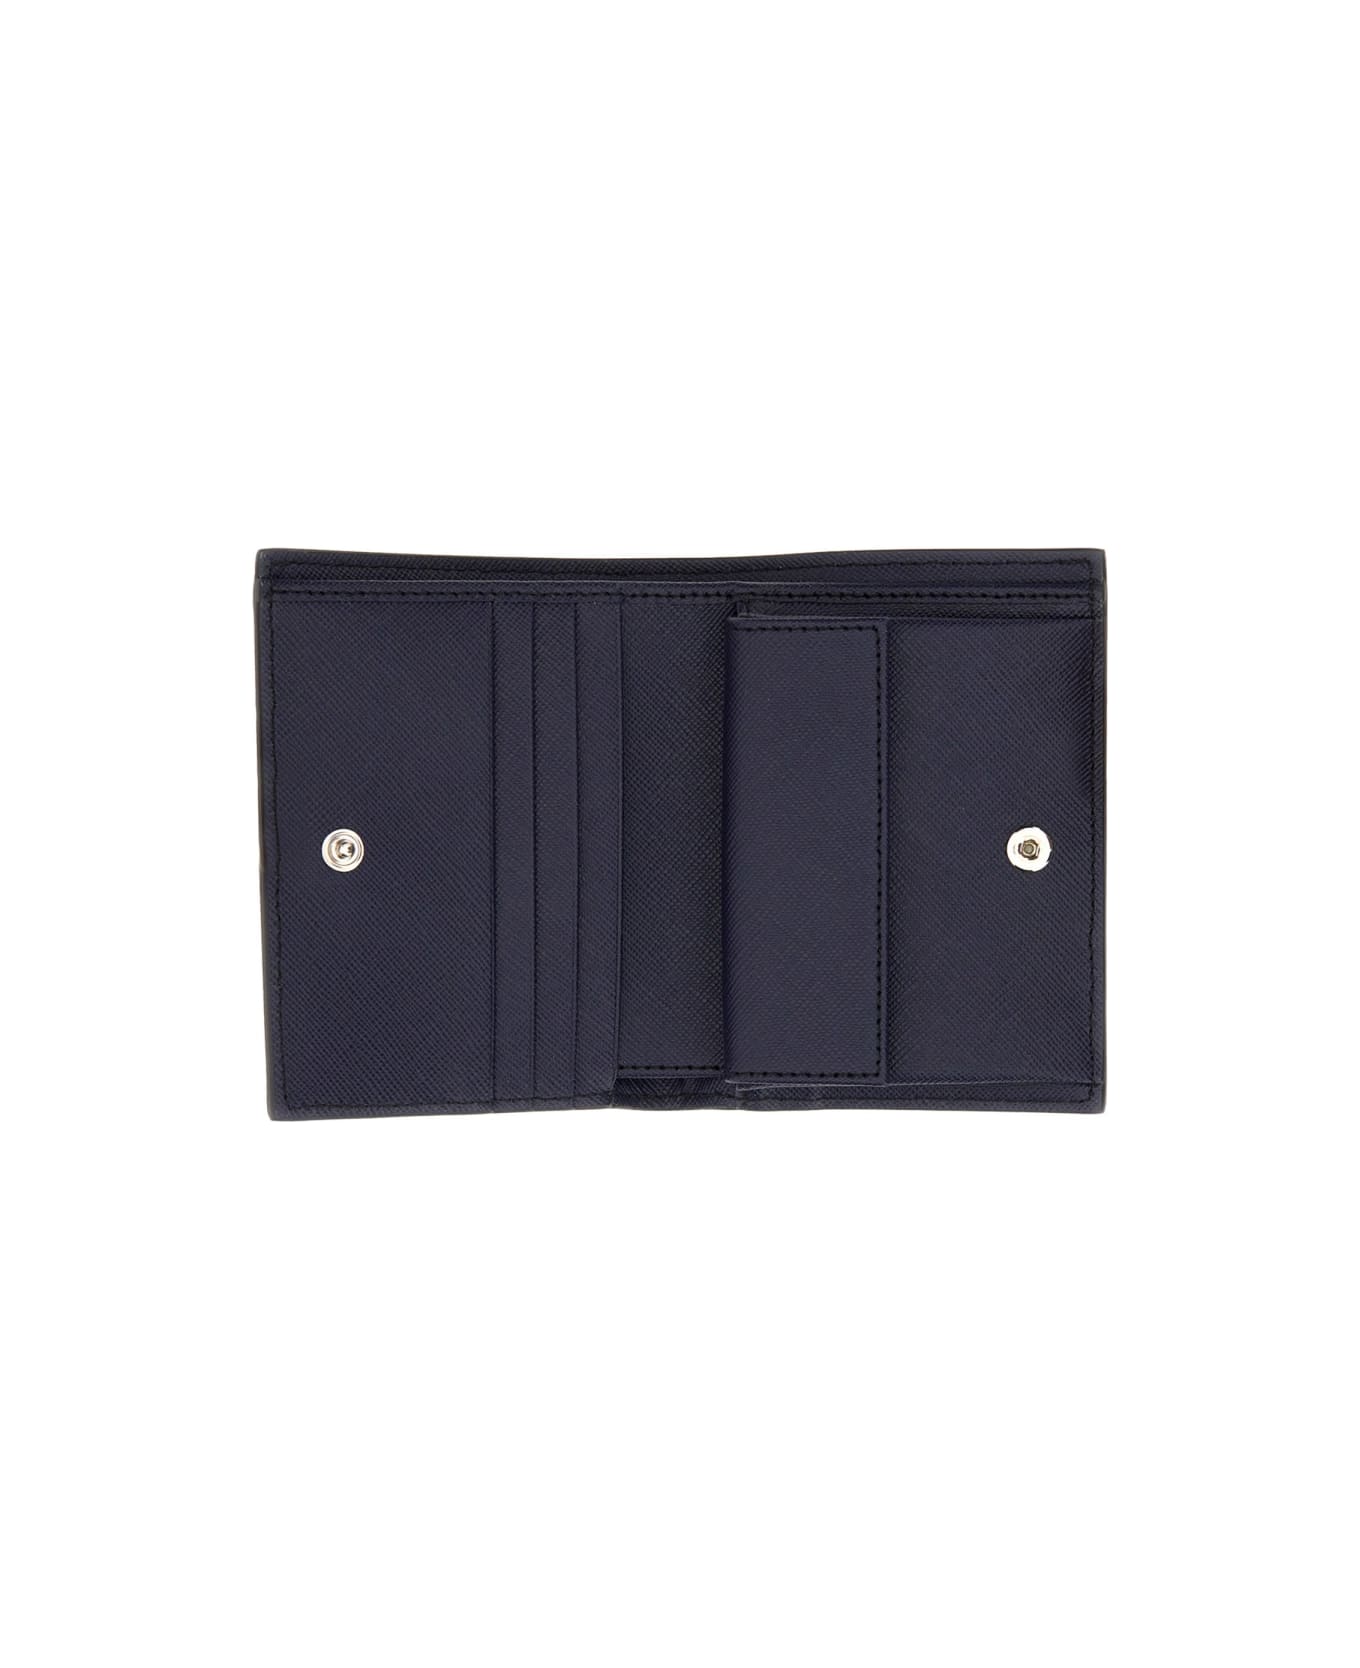 Marni Bifold Wallet - BLUE 財布